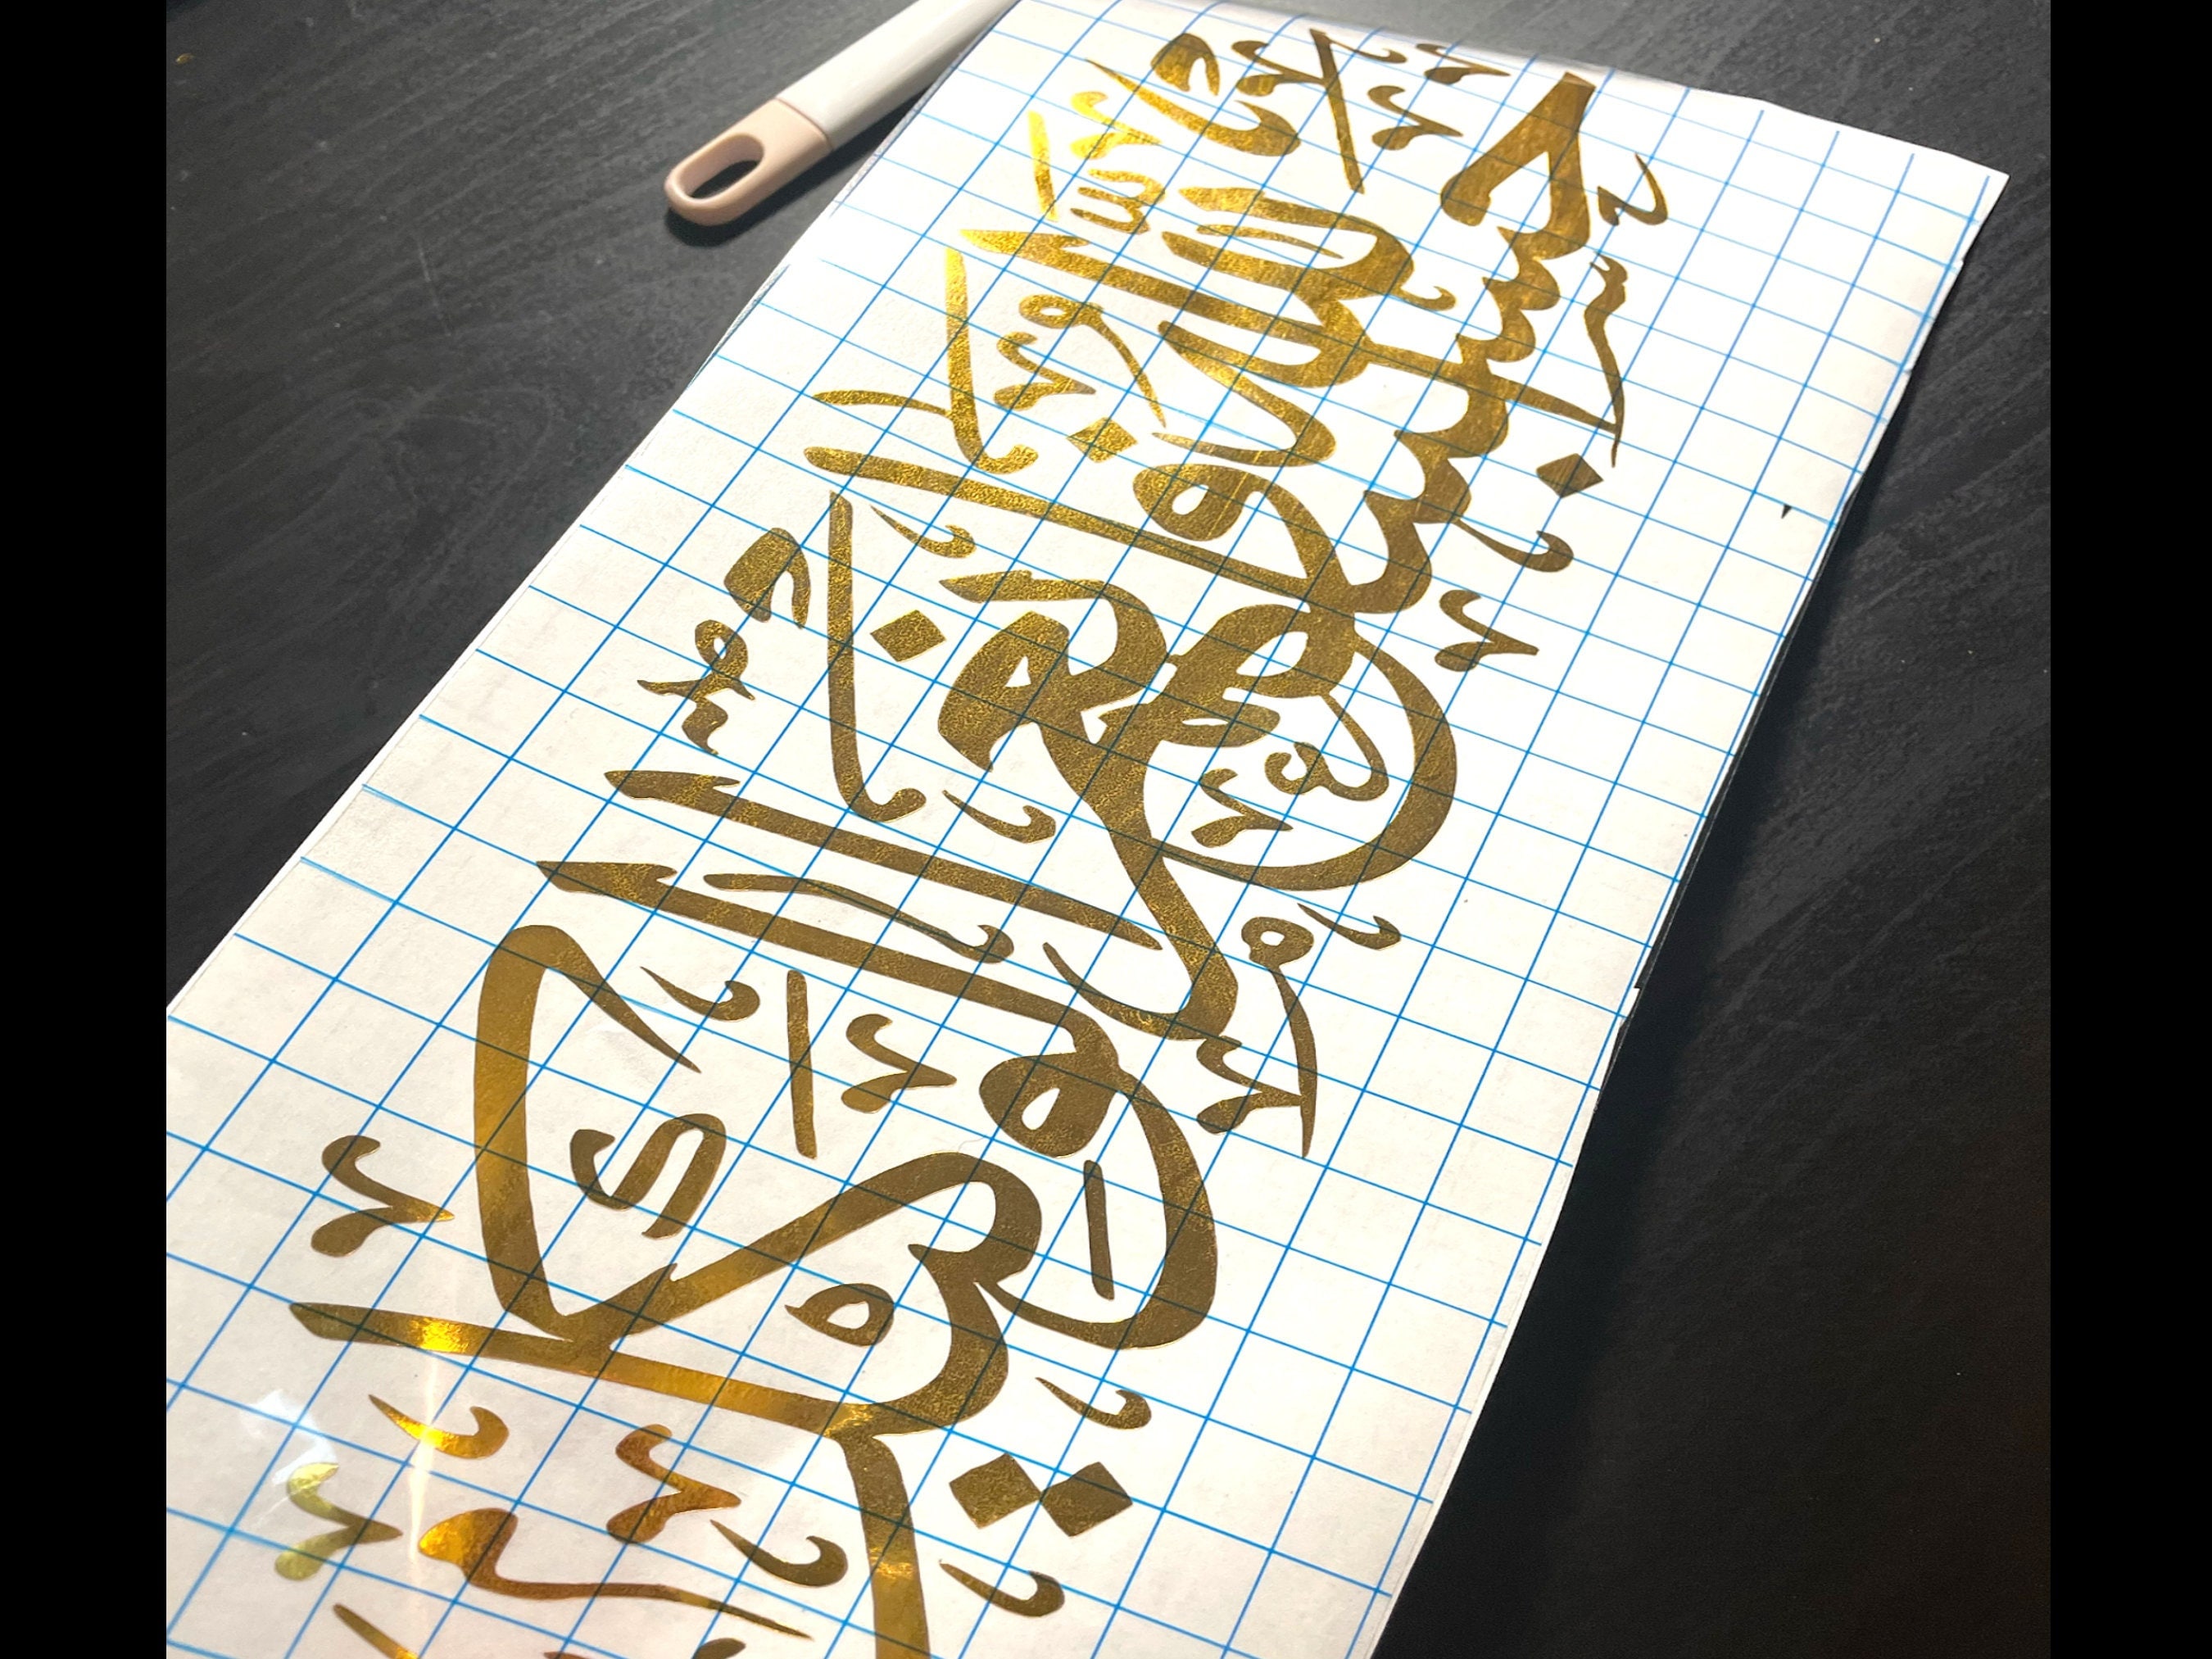 Shahada Islamic Art Stencil, 6.5 x 6.5 inch (S) - Shahada Islamic Oath of Five Pillars of Islam Arabic Calligraphy Stencils for Painting Template